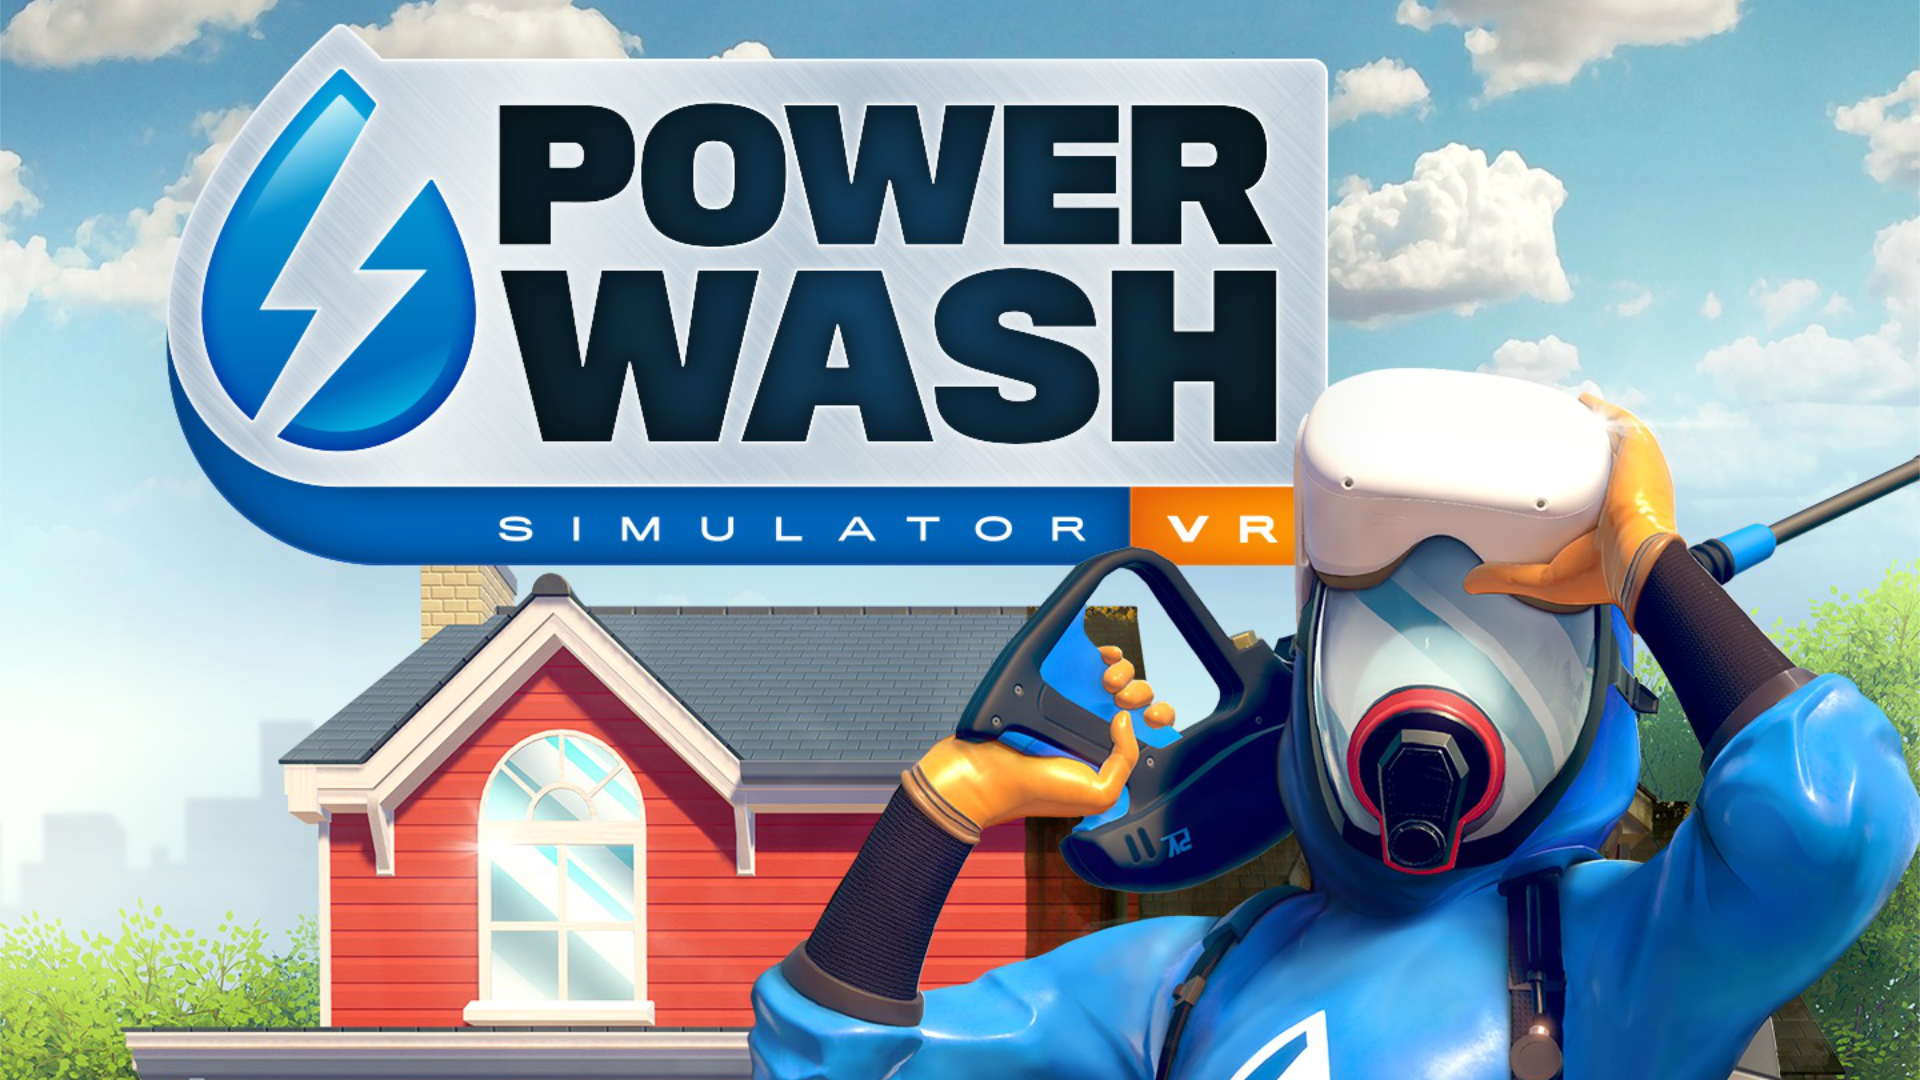 PowerWash Simulator VR - Out November 2